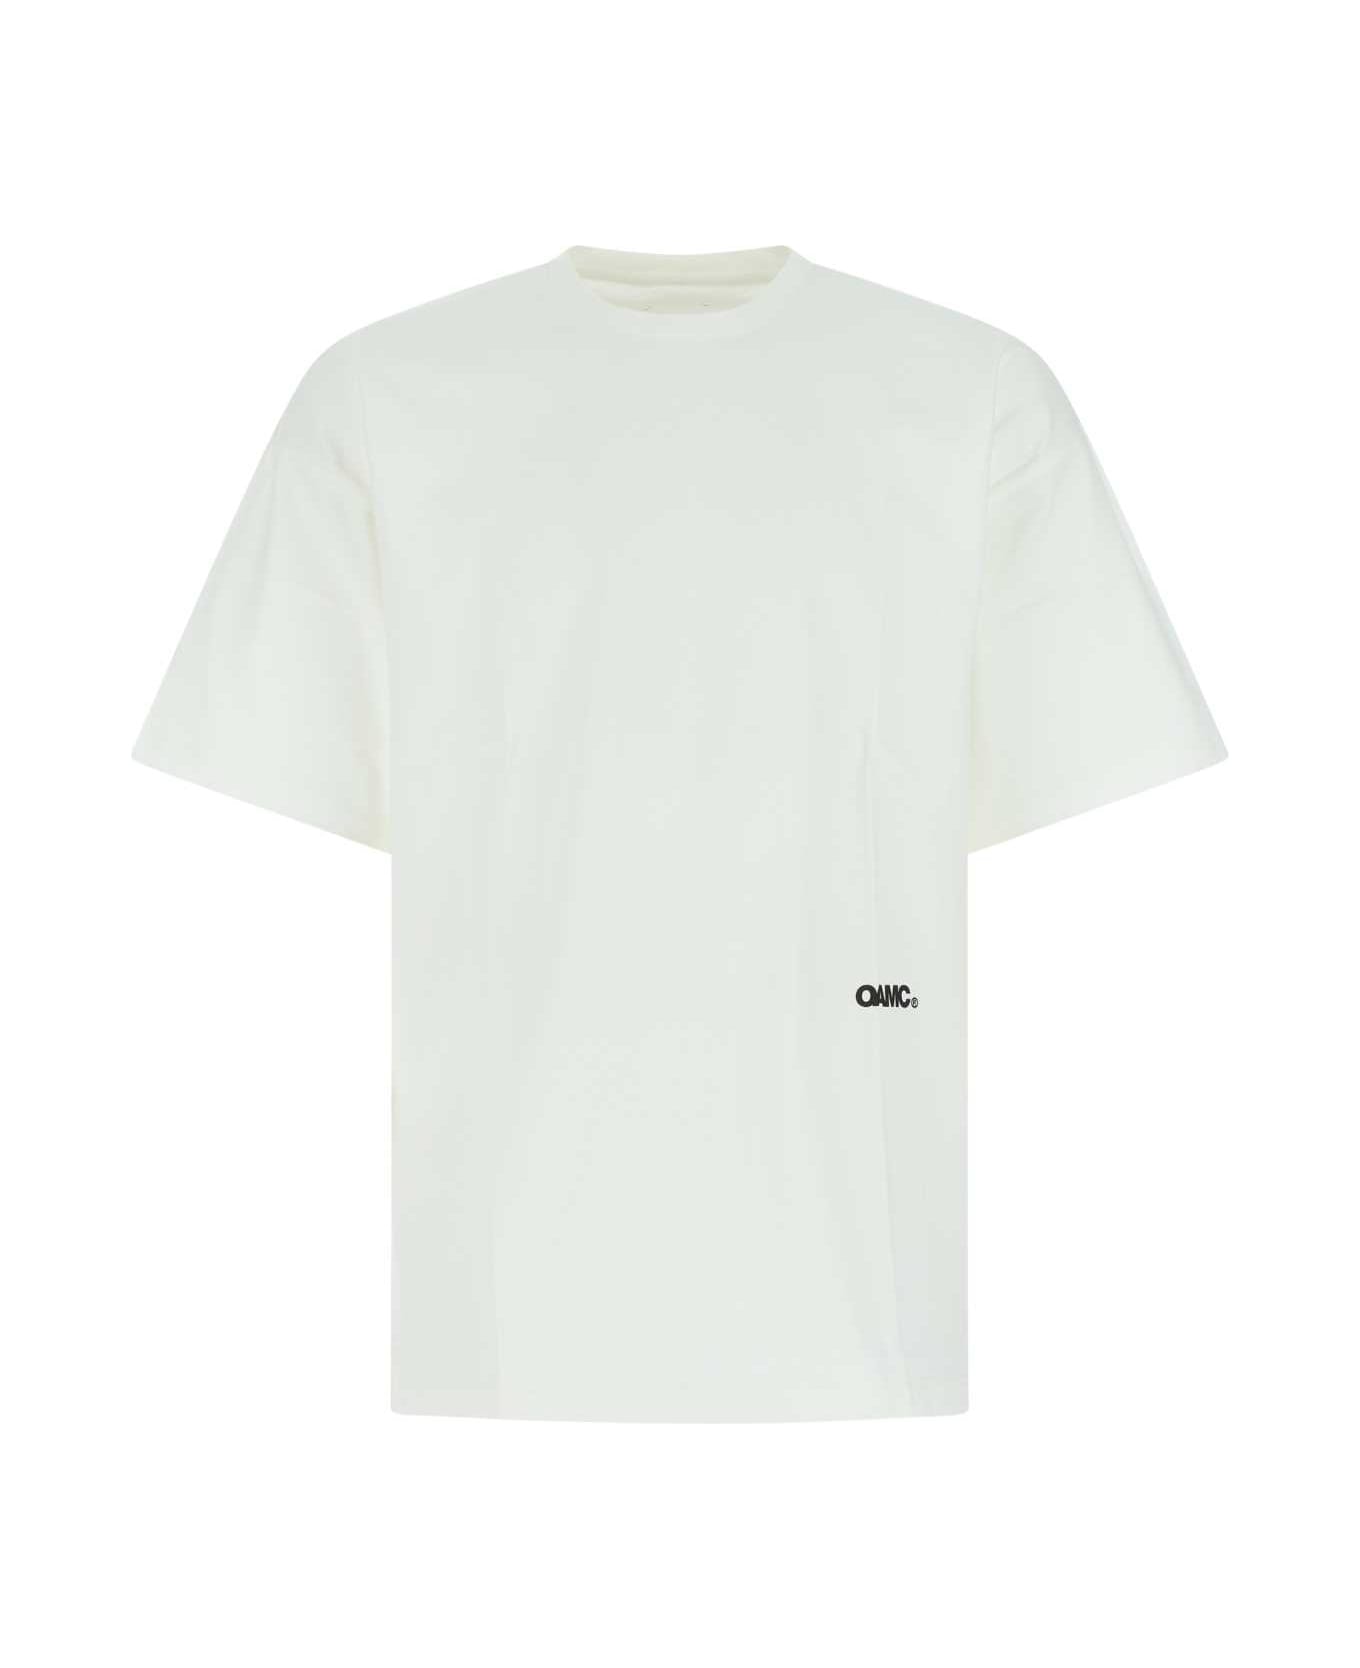 OAMC White Cotton Oversize T-shirt - 101 シャツ